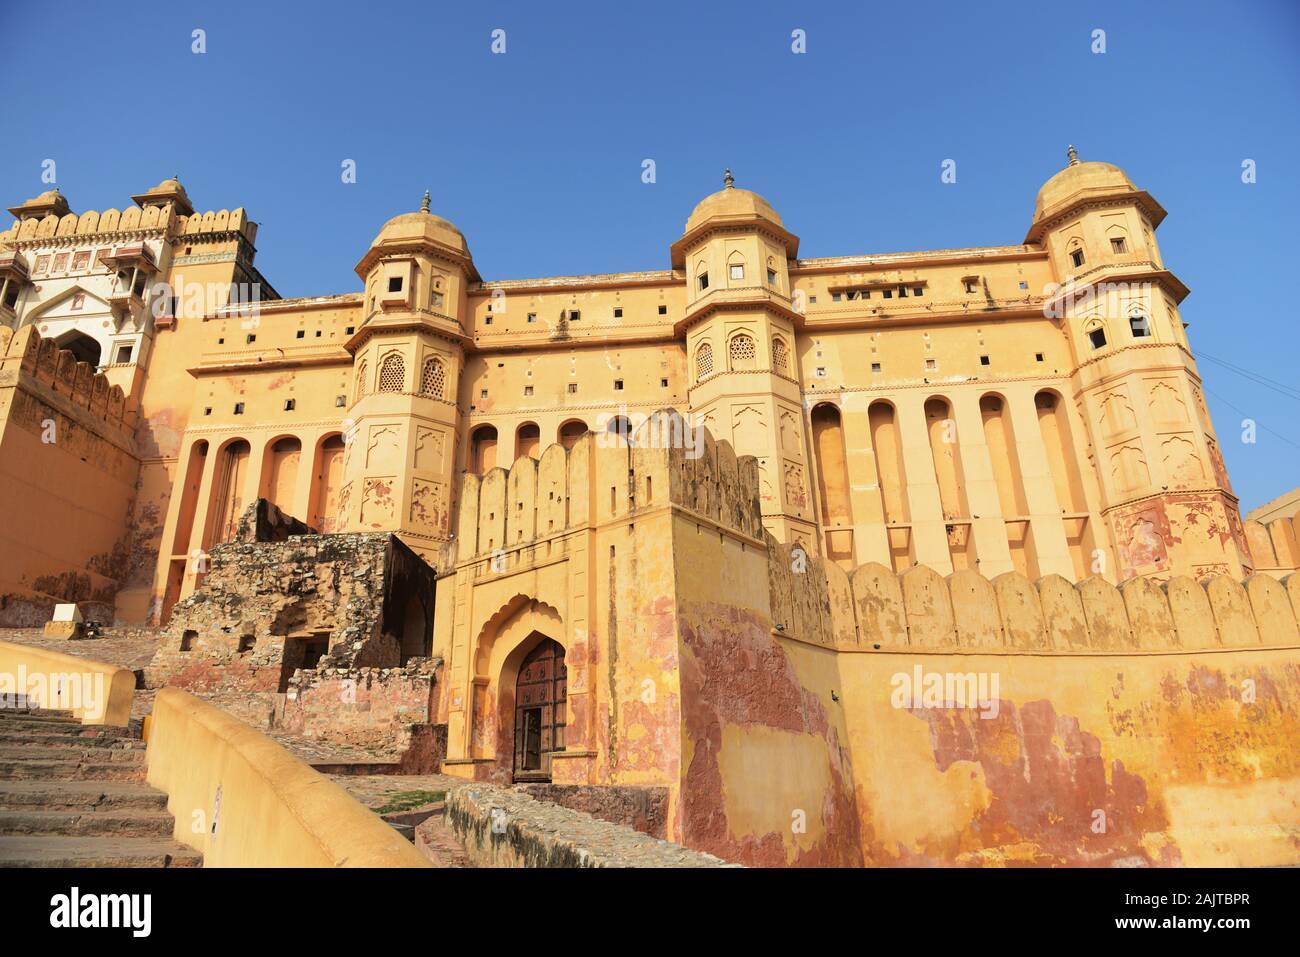 The beautiful Amber fort near Jaipur, India. Stock Photo